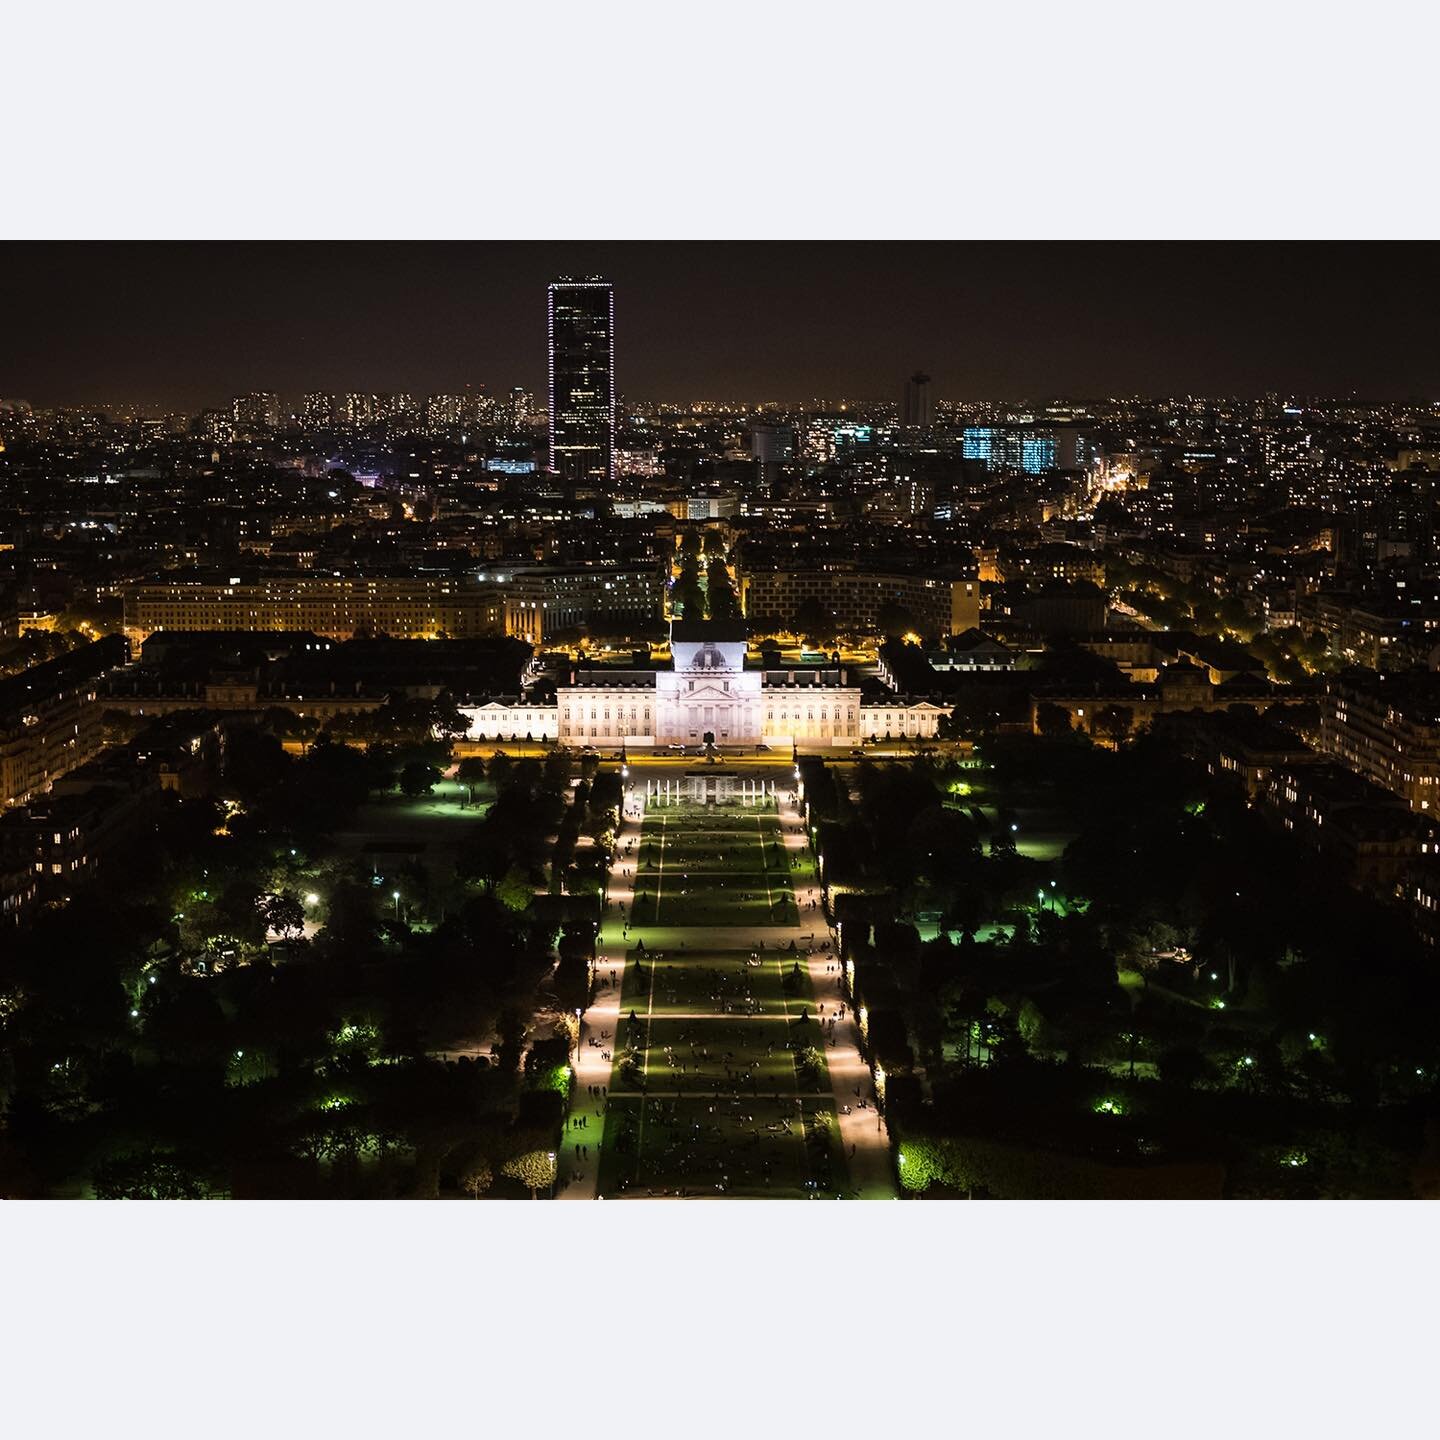 Paris by night from the Eiffel Tower - Paris
.
.
#Parisbynight #TourEiffel #Paris #ILoveParis #TourEiffelParis #cityoflights #ChampdeMars #ParisMonAmour #TourMontparnasse #ParisPhoto #ParisCityVision #Paris_Focus_On #ParisFranceOfficial #MonumentOfPa